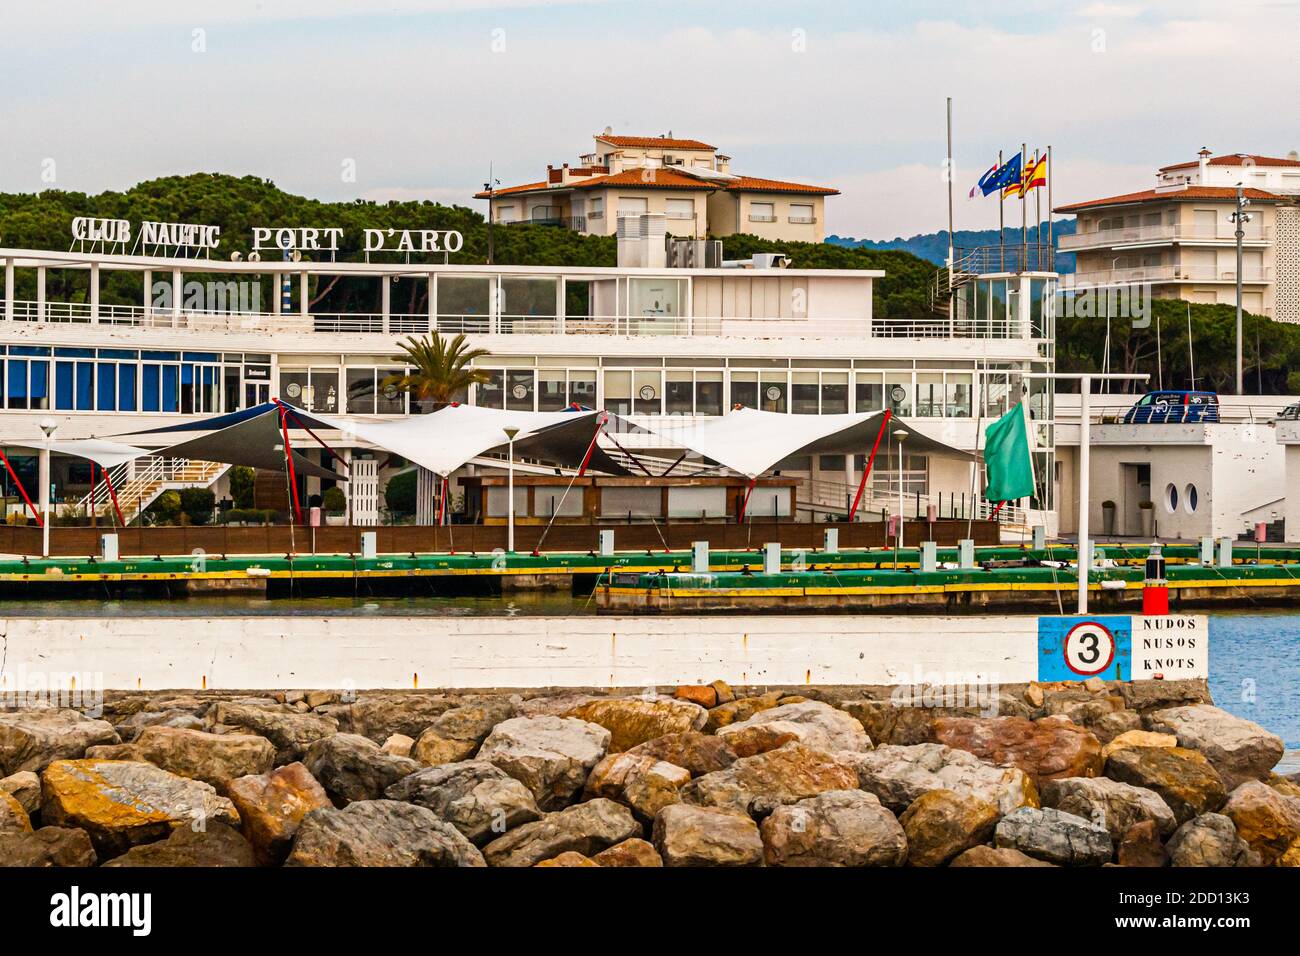 Club Nautic Port d'Aro in Sant Feliu de Guíxols, Spain Stock Photo